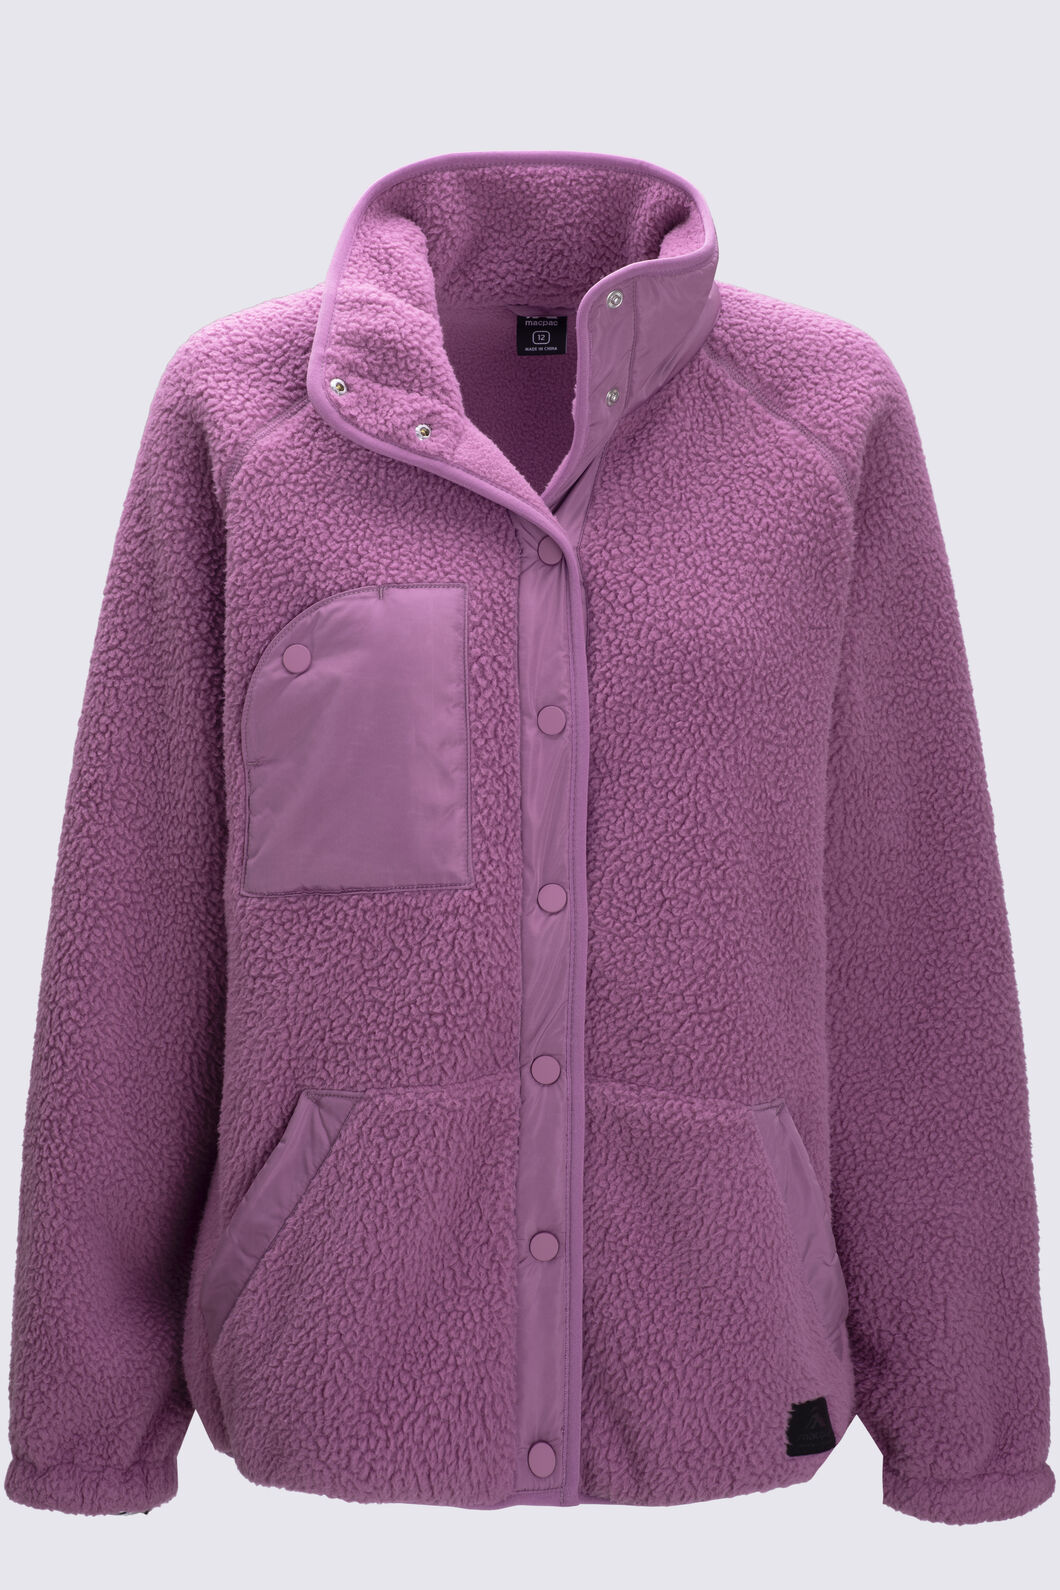 Macpac Women's Athene Fleece Jacket | Macpac